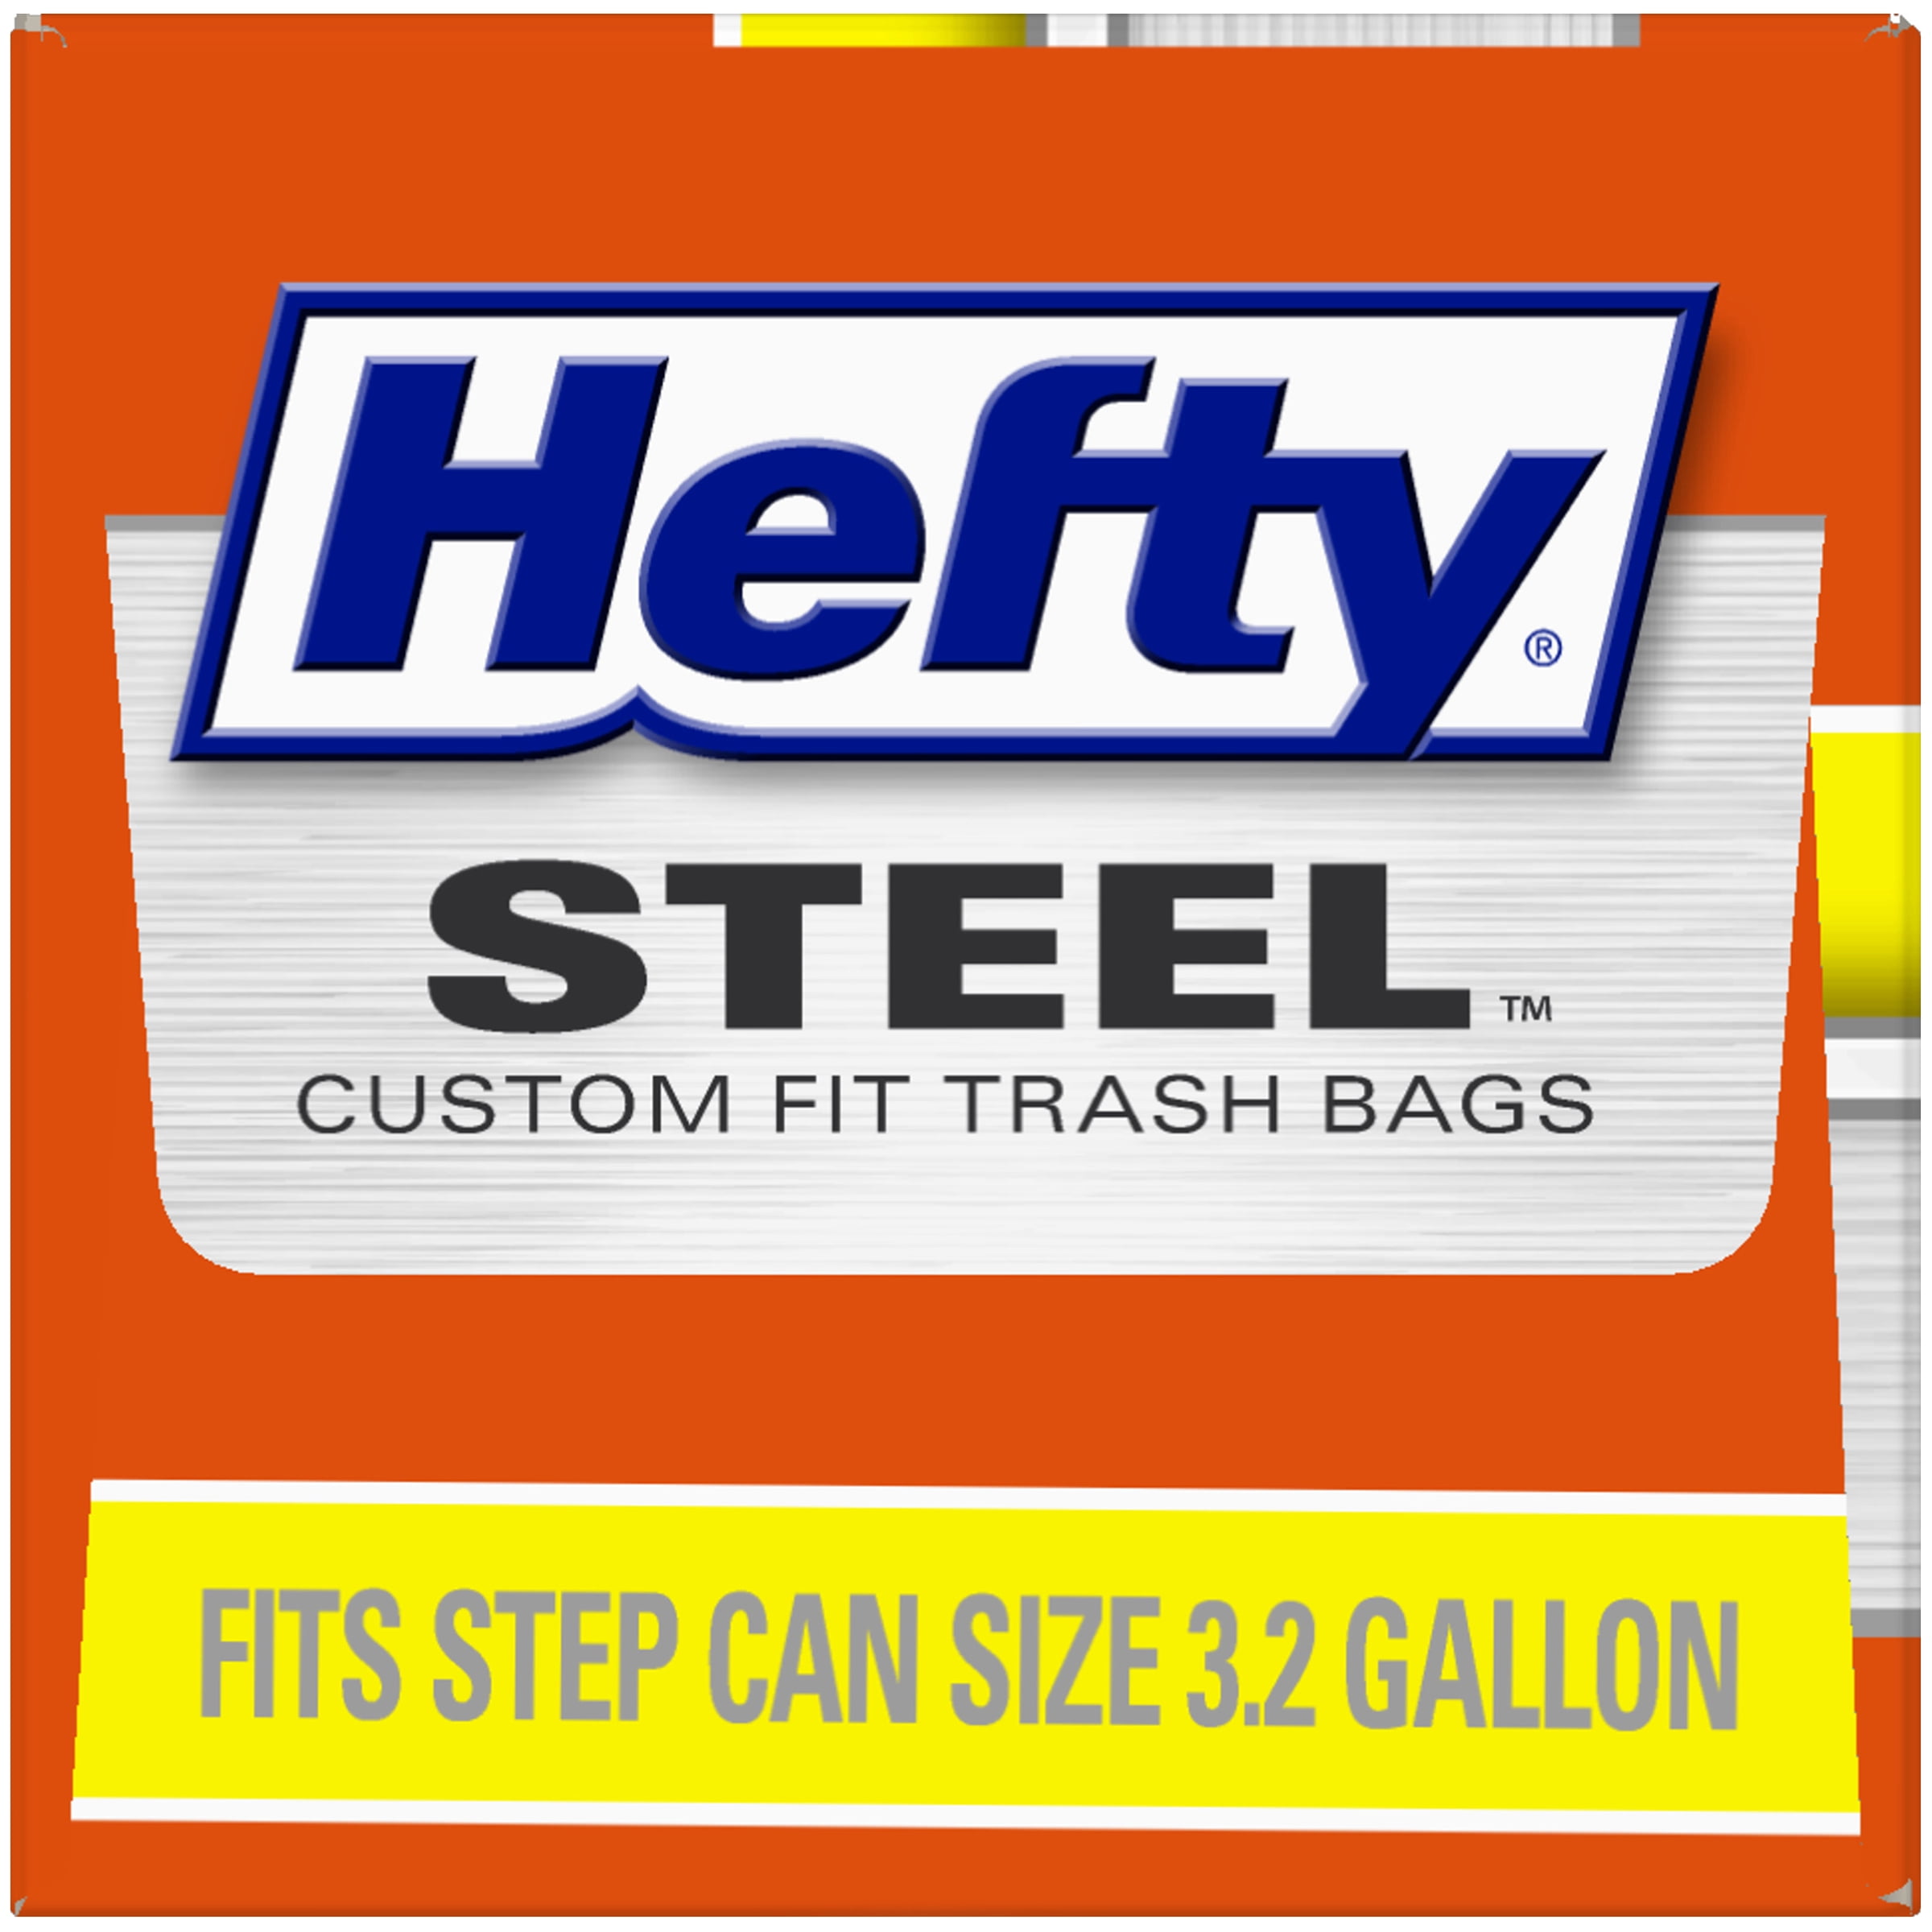 Hefty Steel Custom Fit L Size Drawstring Trash Bags Black 14.5